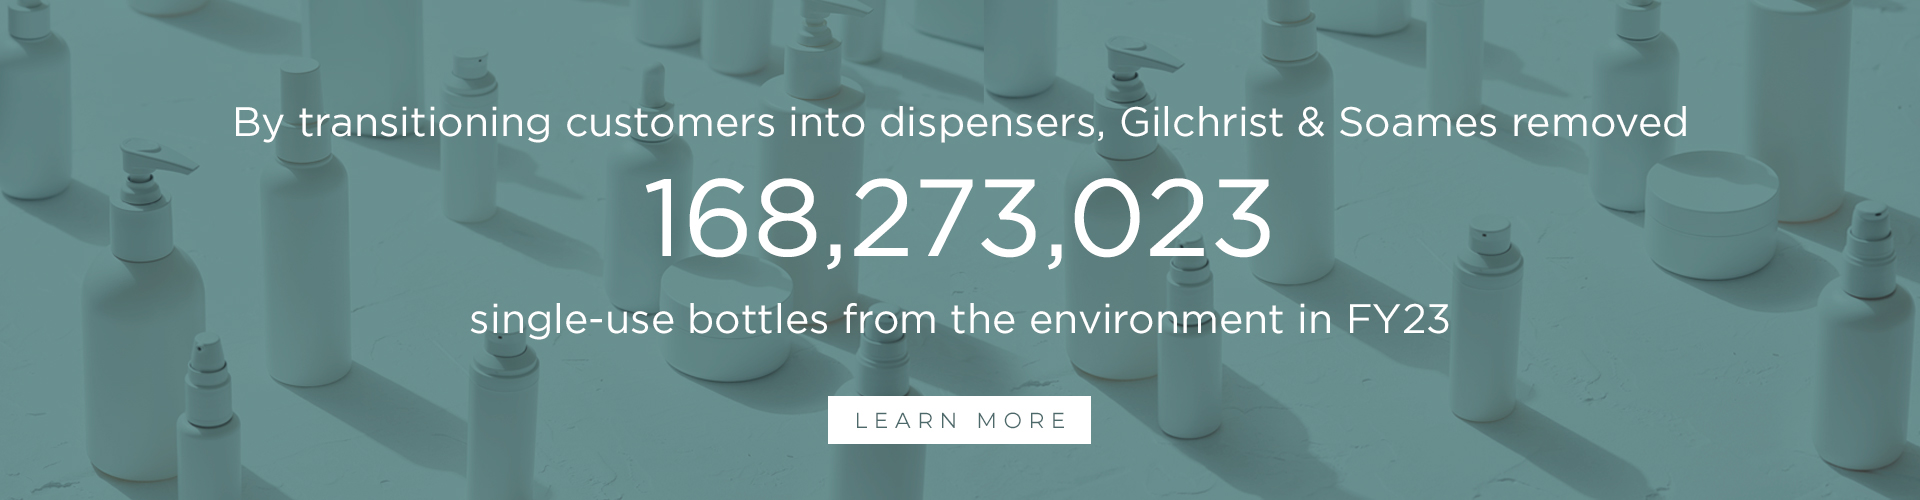 Reduce Plastic by 86 million single use bottles